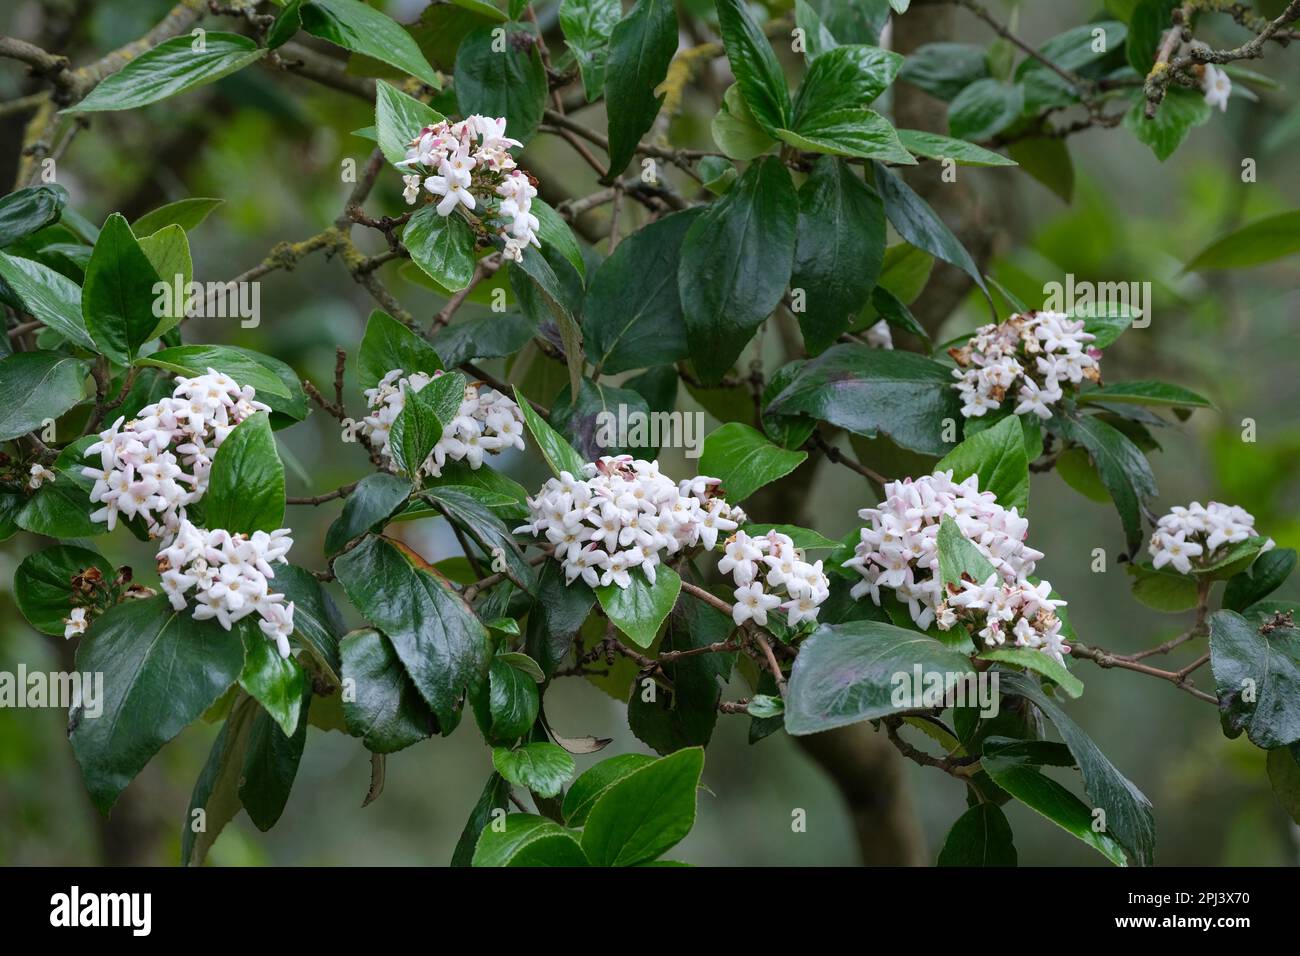 Viburnum burkwoodii Mohawk, arrowwood Mohawk, deciduous shrub flowers open white from red buds, Stock Photo